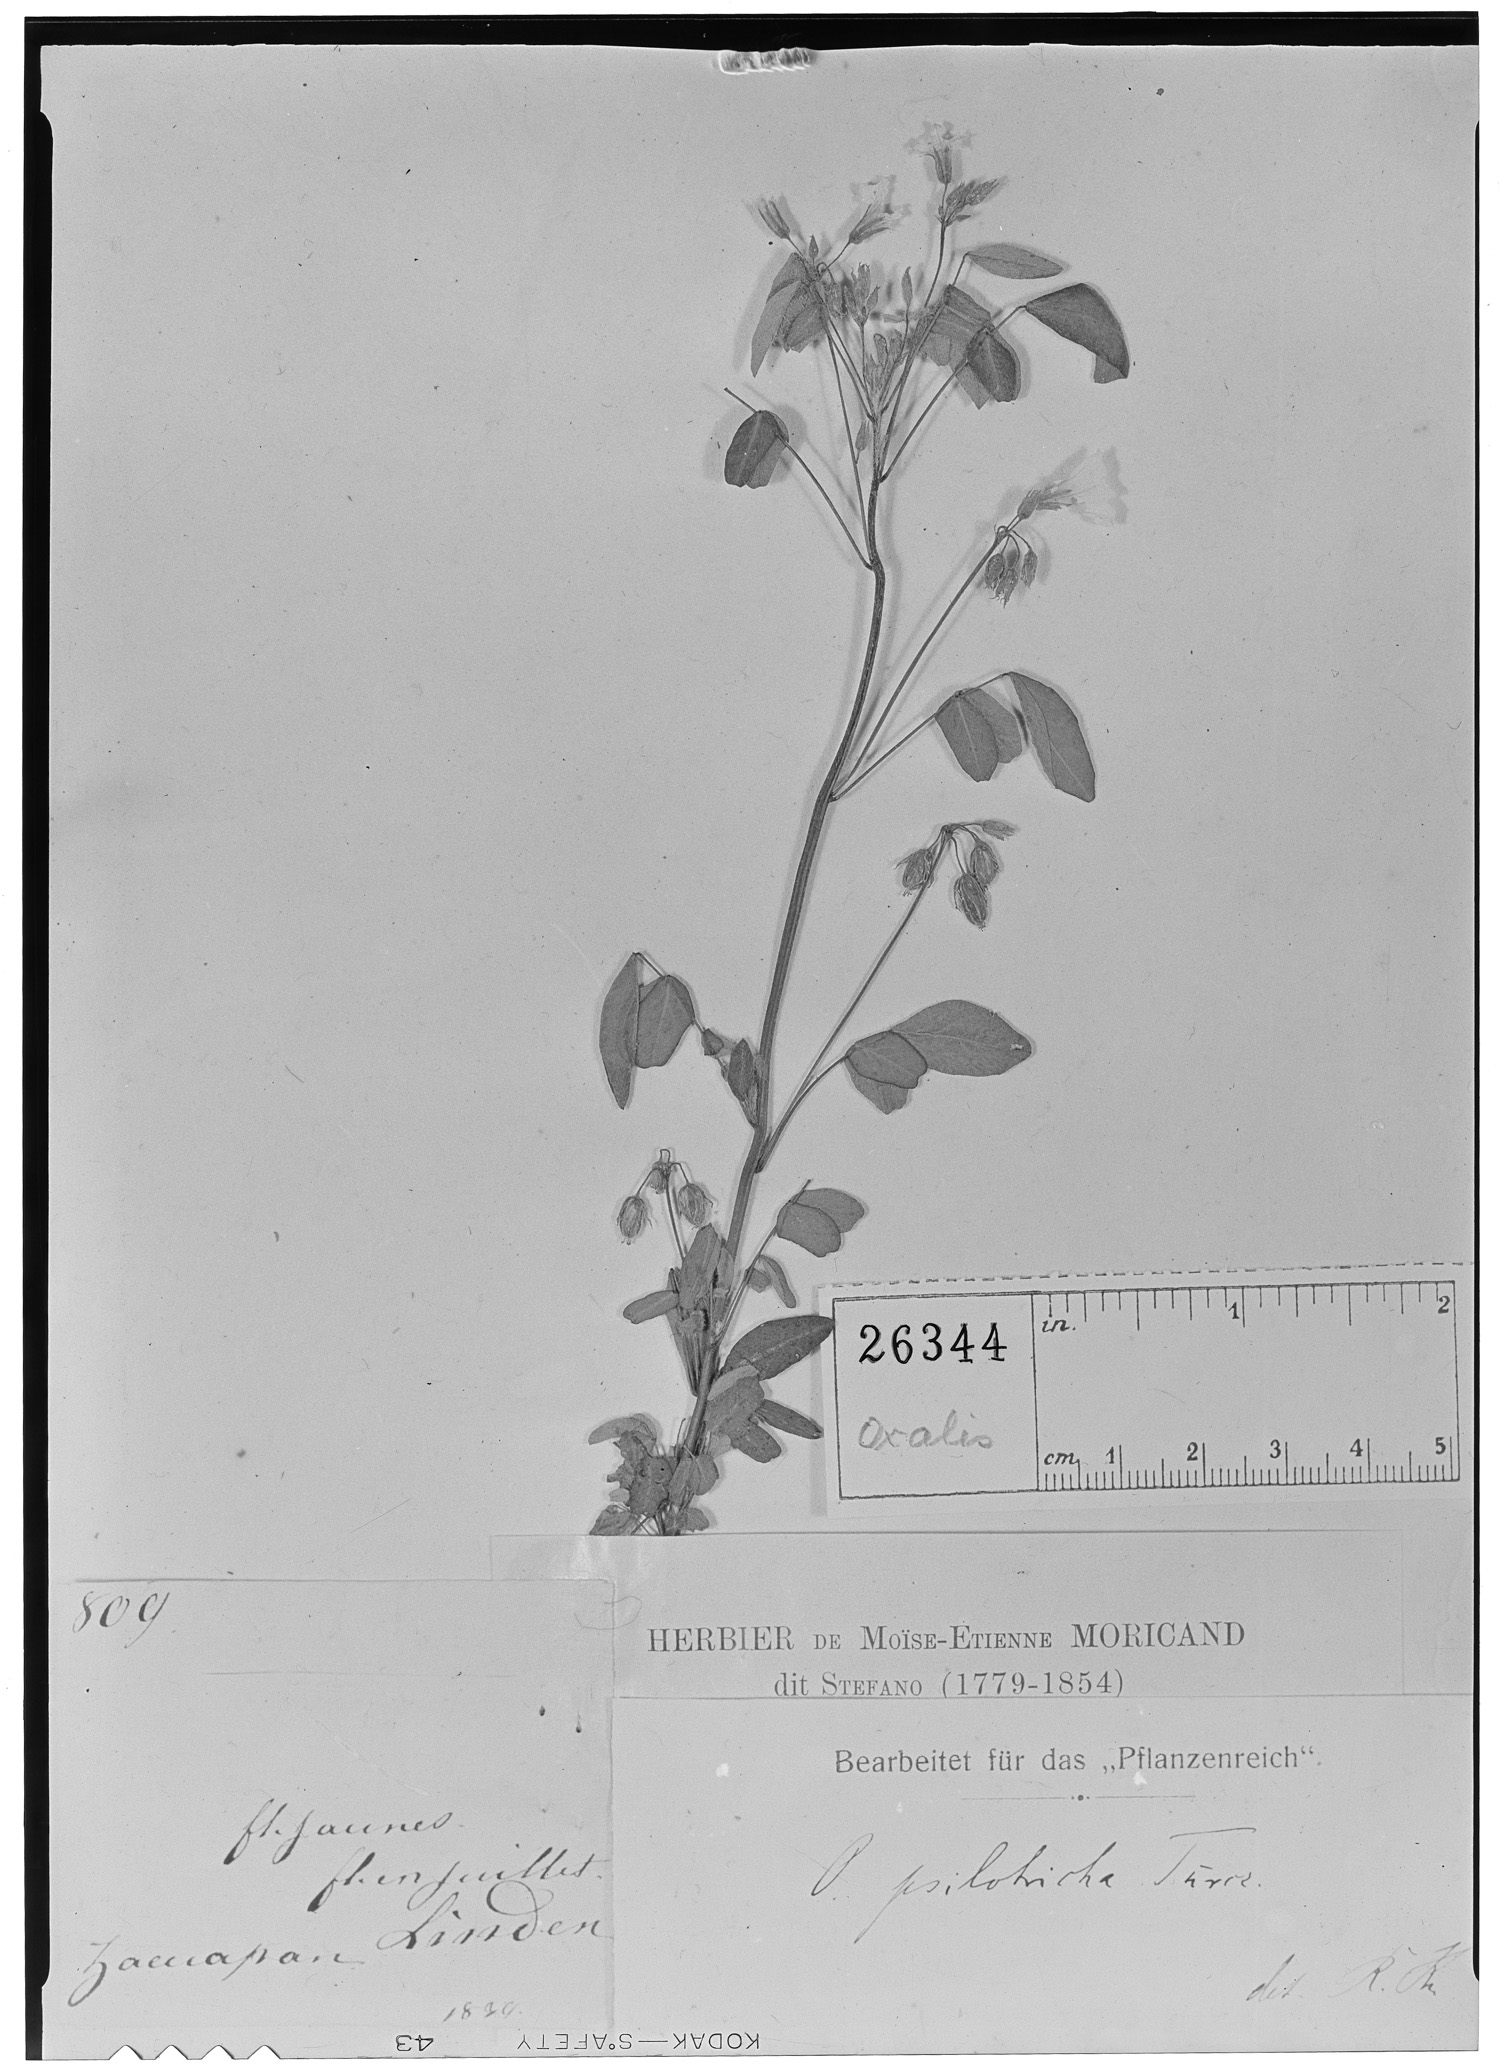 Oxalis frutescens subsp. angustifolia image